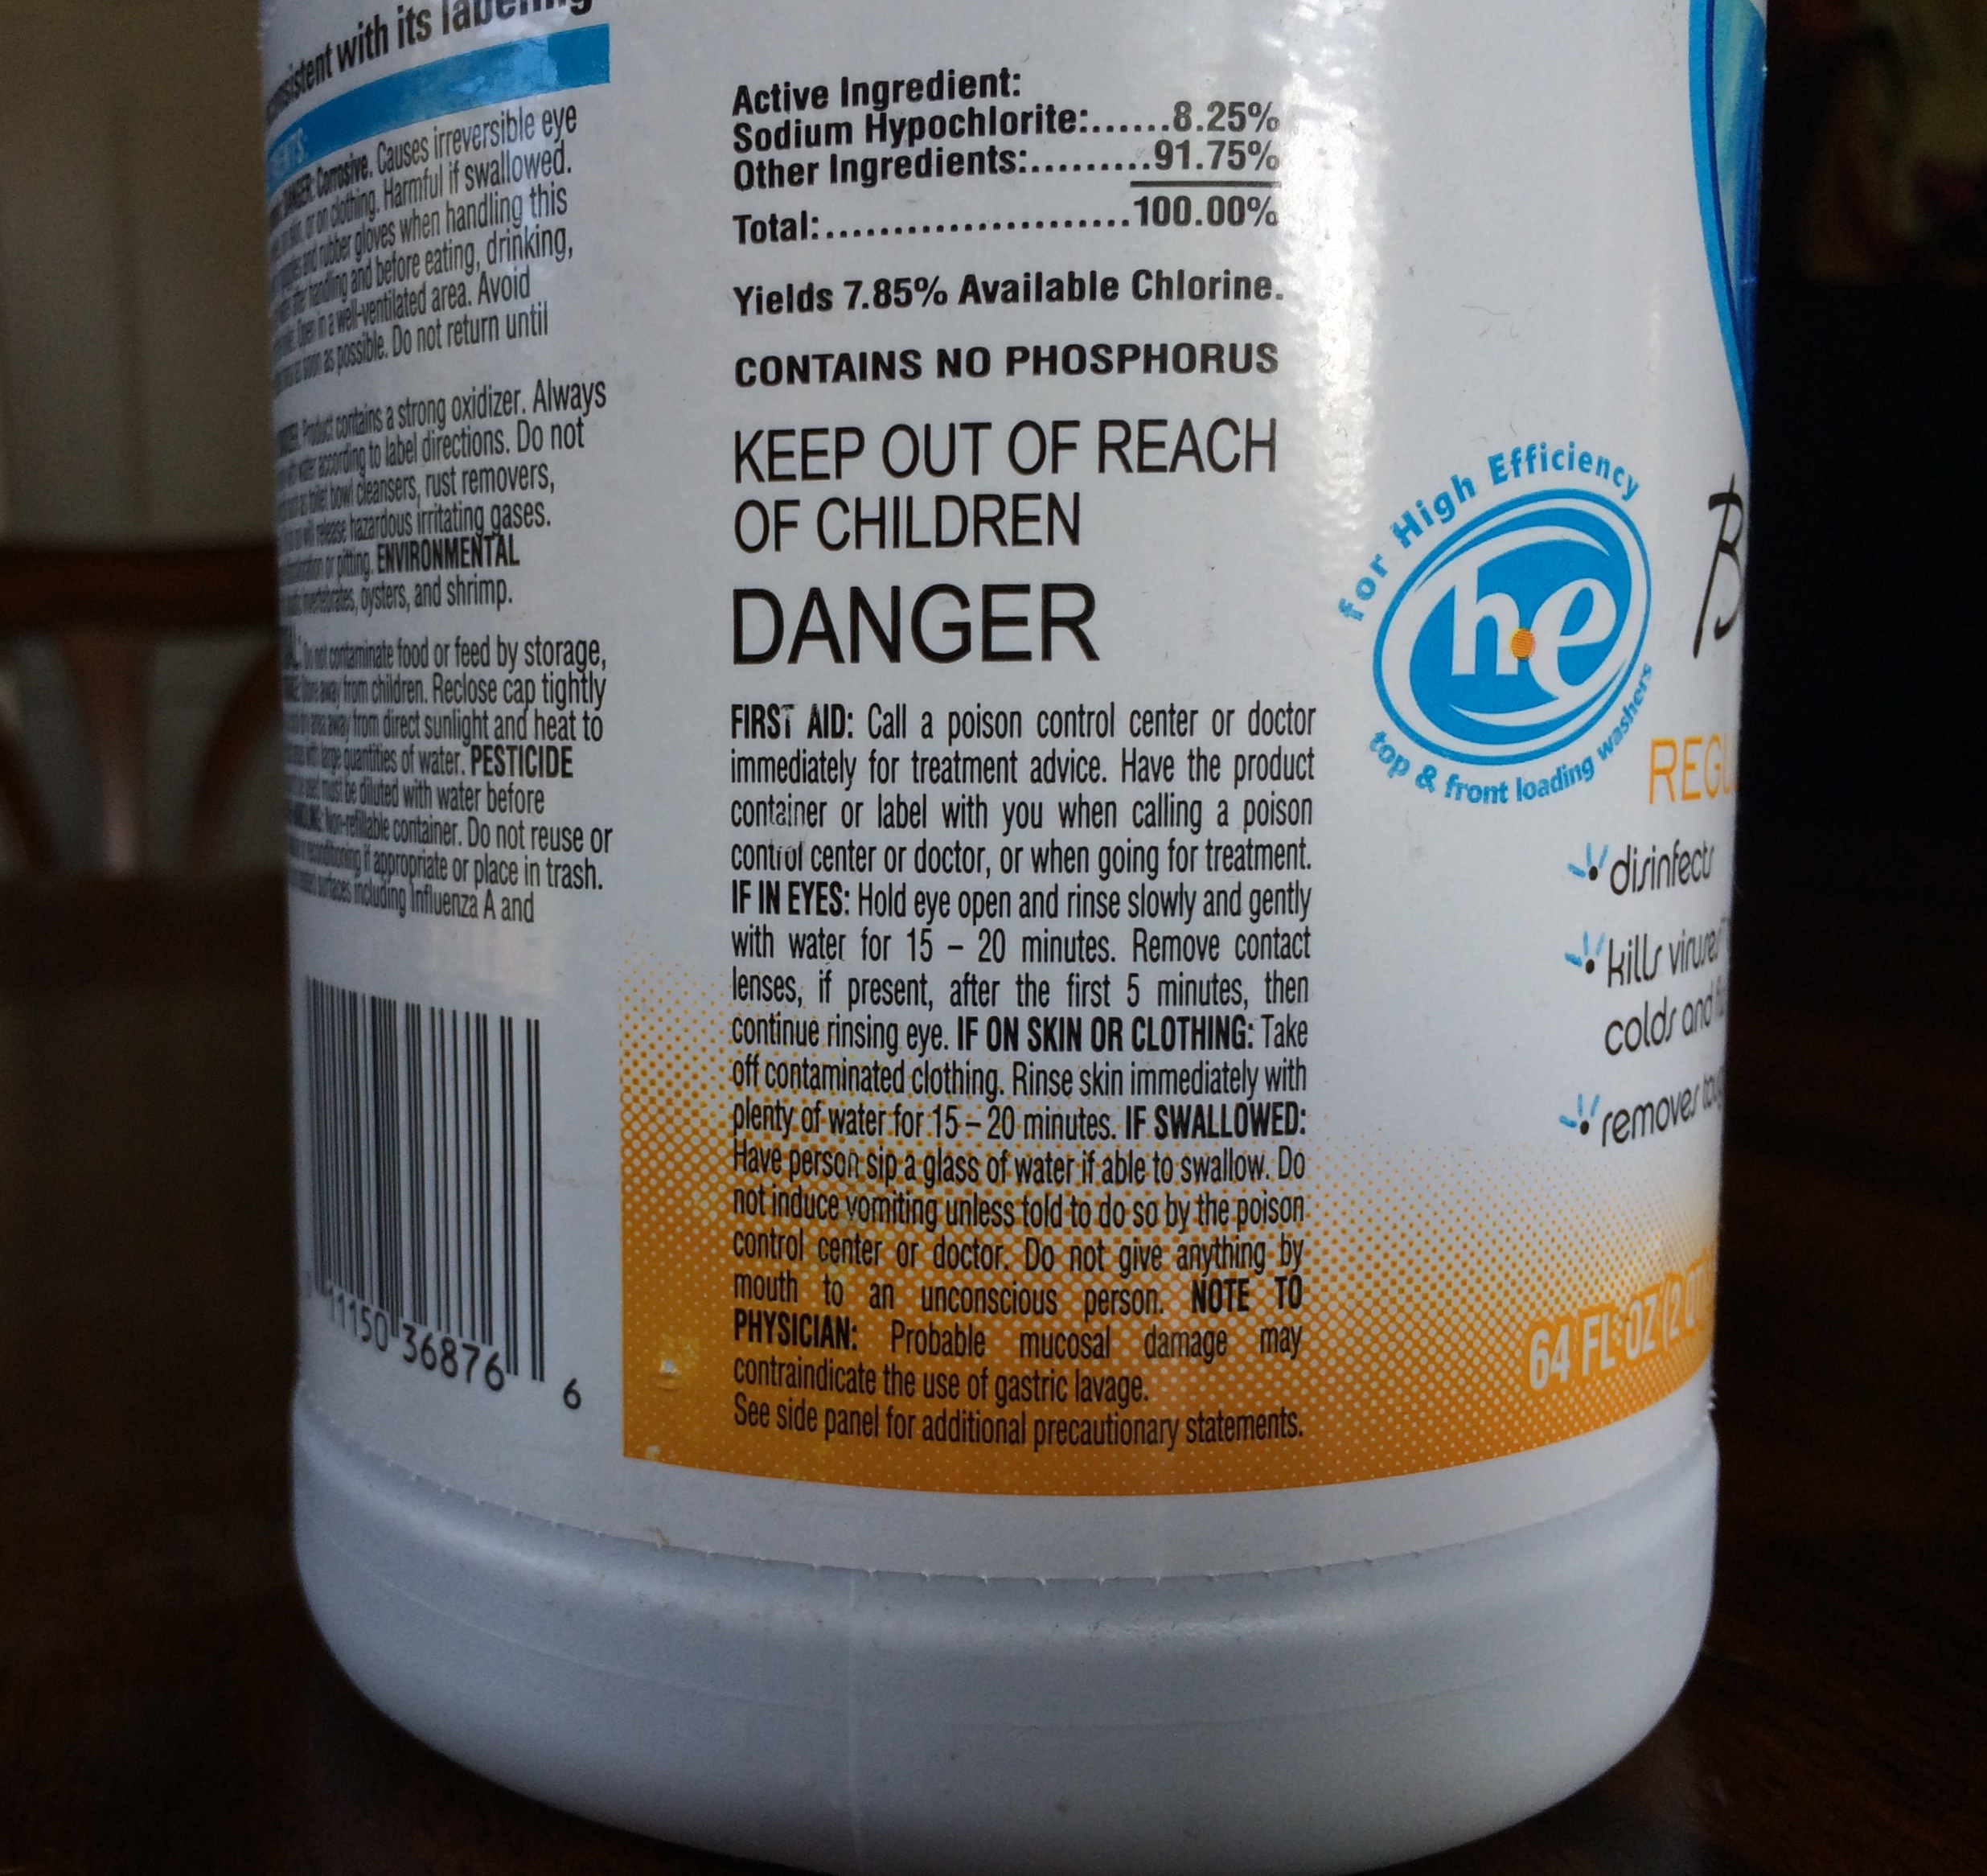 Label on a bleach bottle: sodium hypochlorite